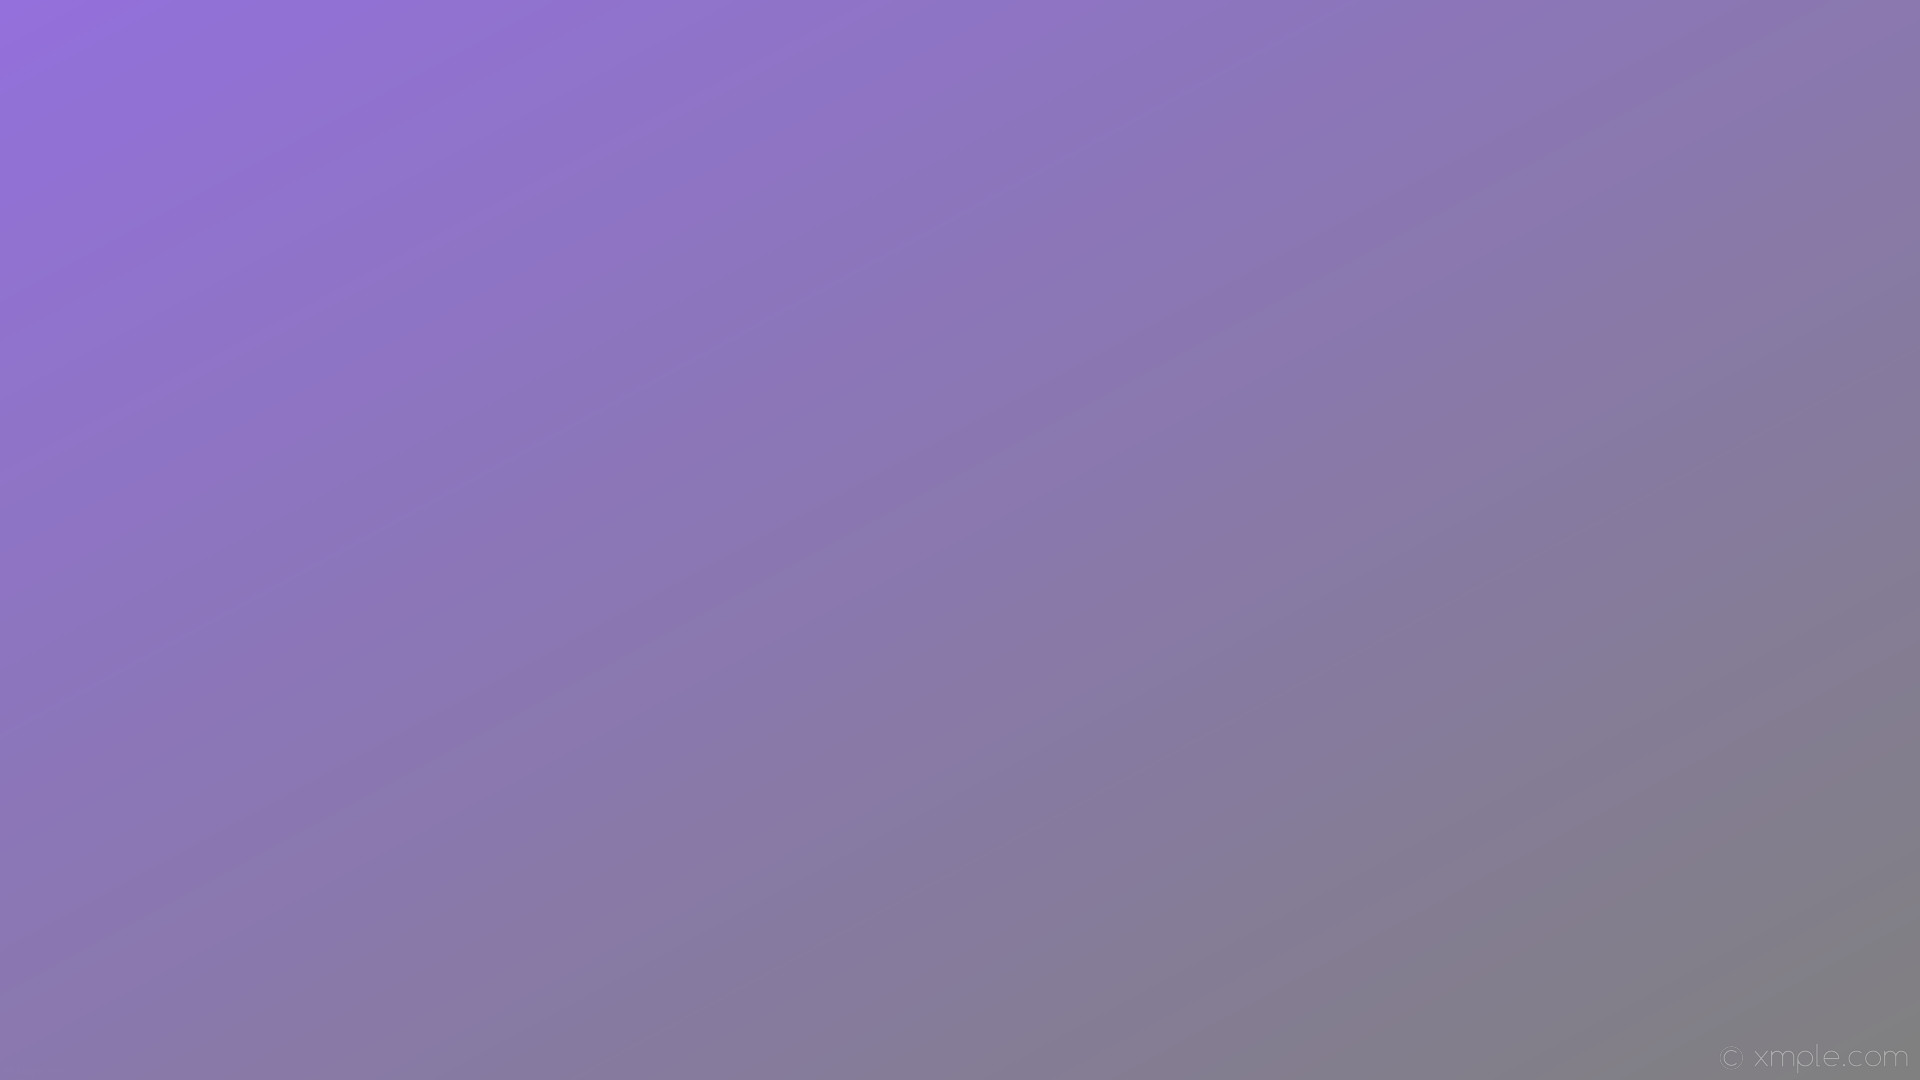 1920x1080 wallpaper grey purple gradient linear gray medium purple #808080 #9370db  330Â°